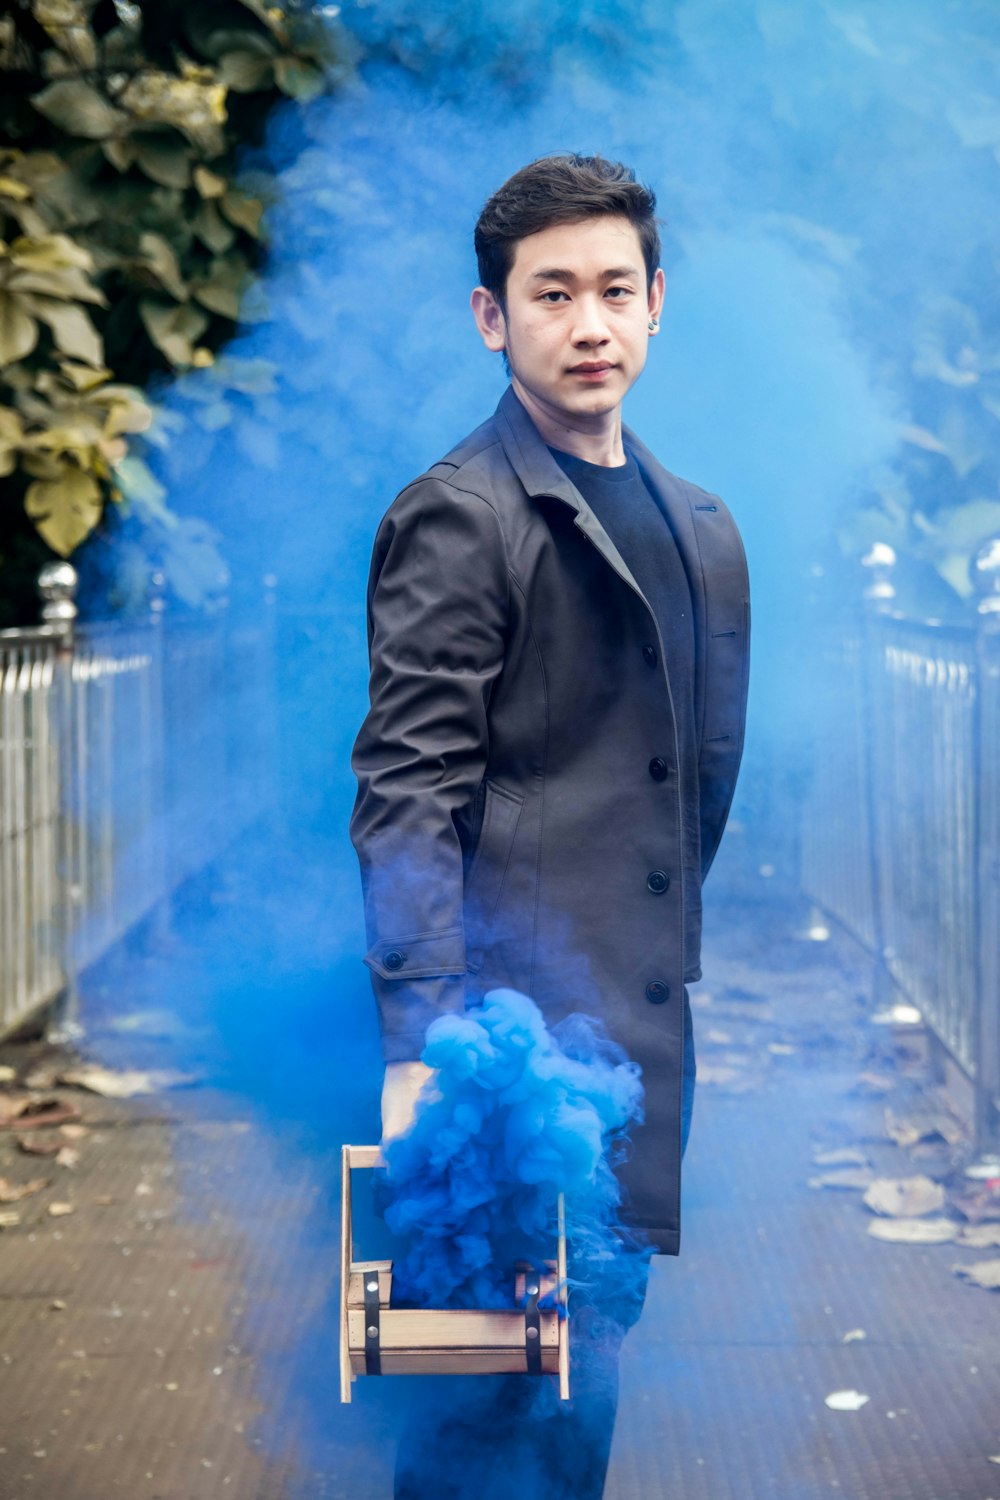 man in gray coat holding machine emitting blue smoke